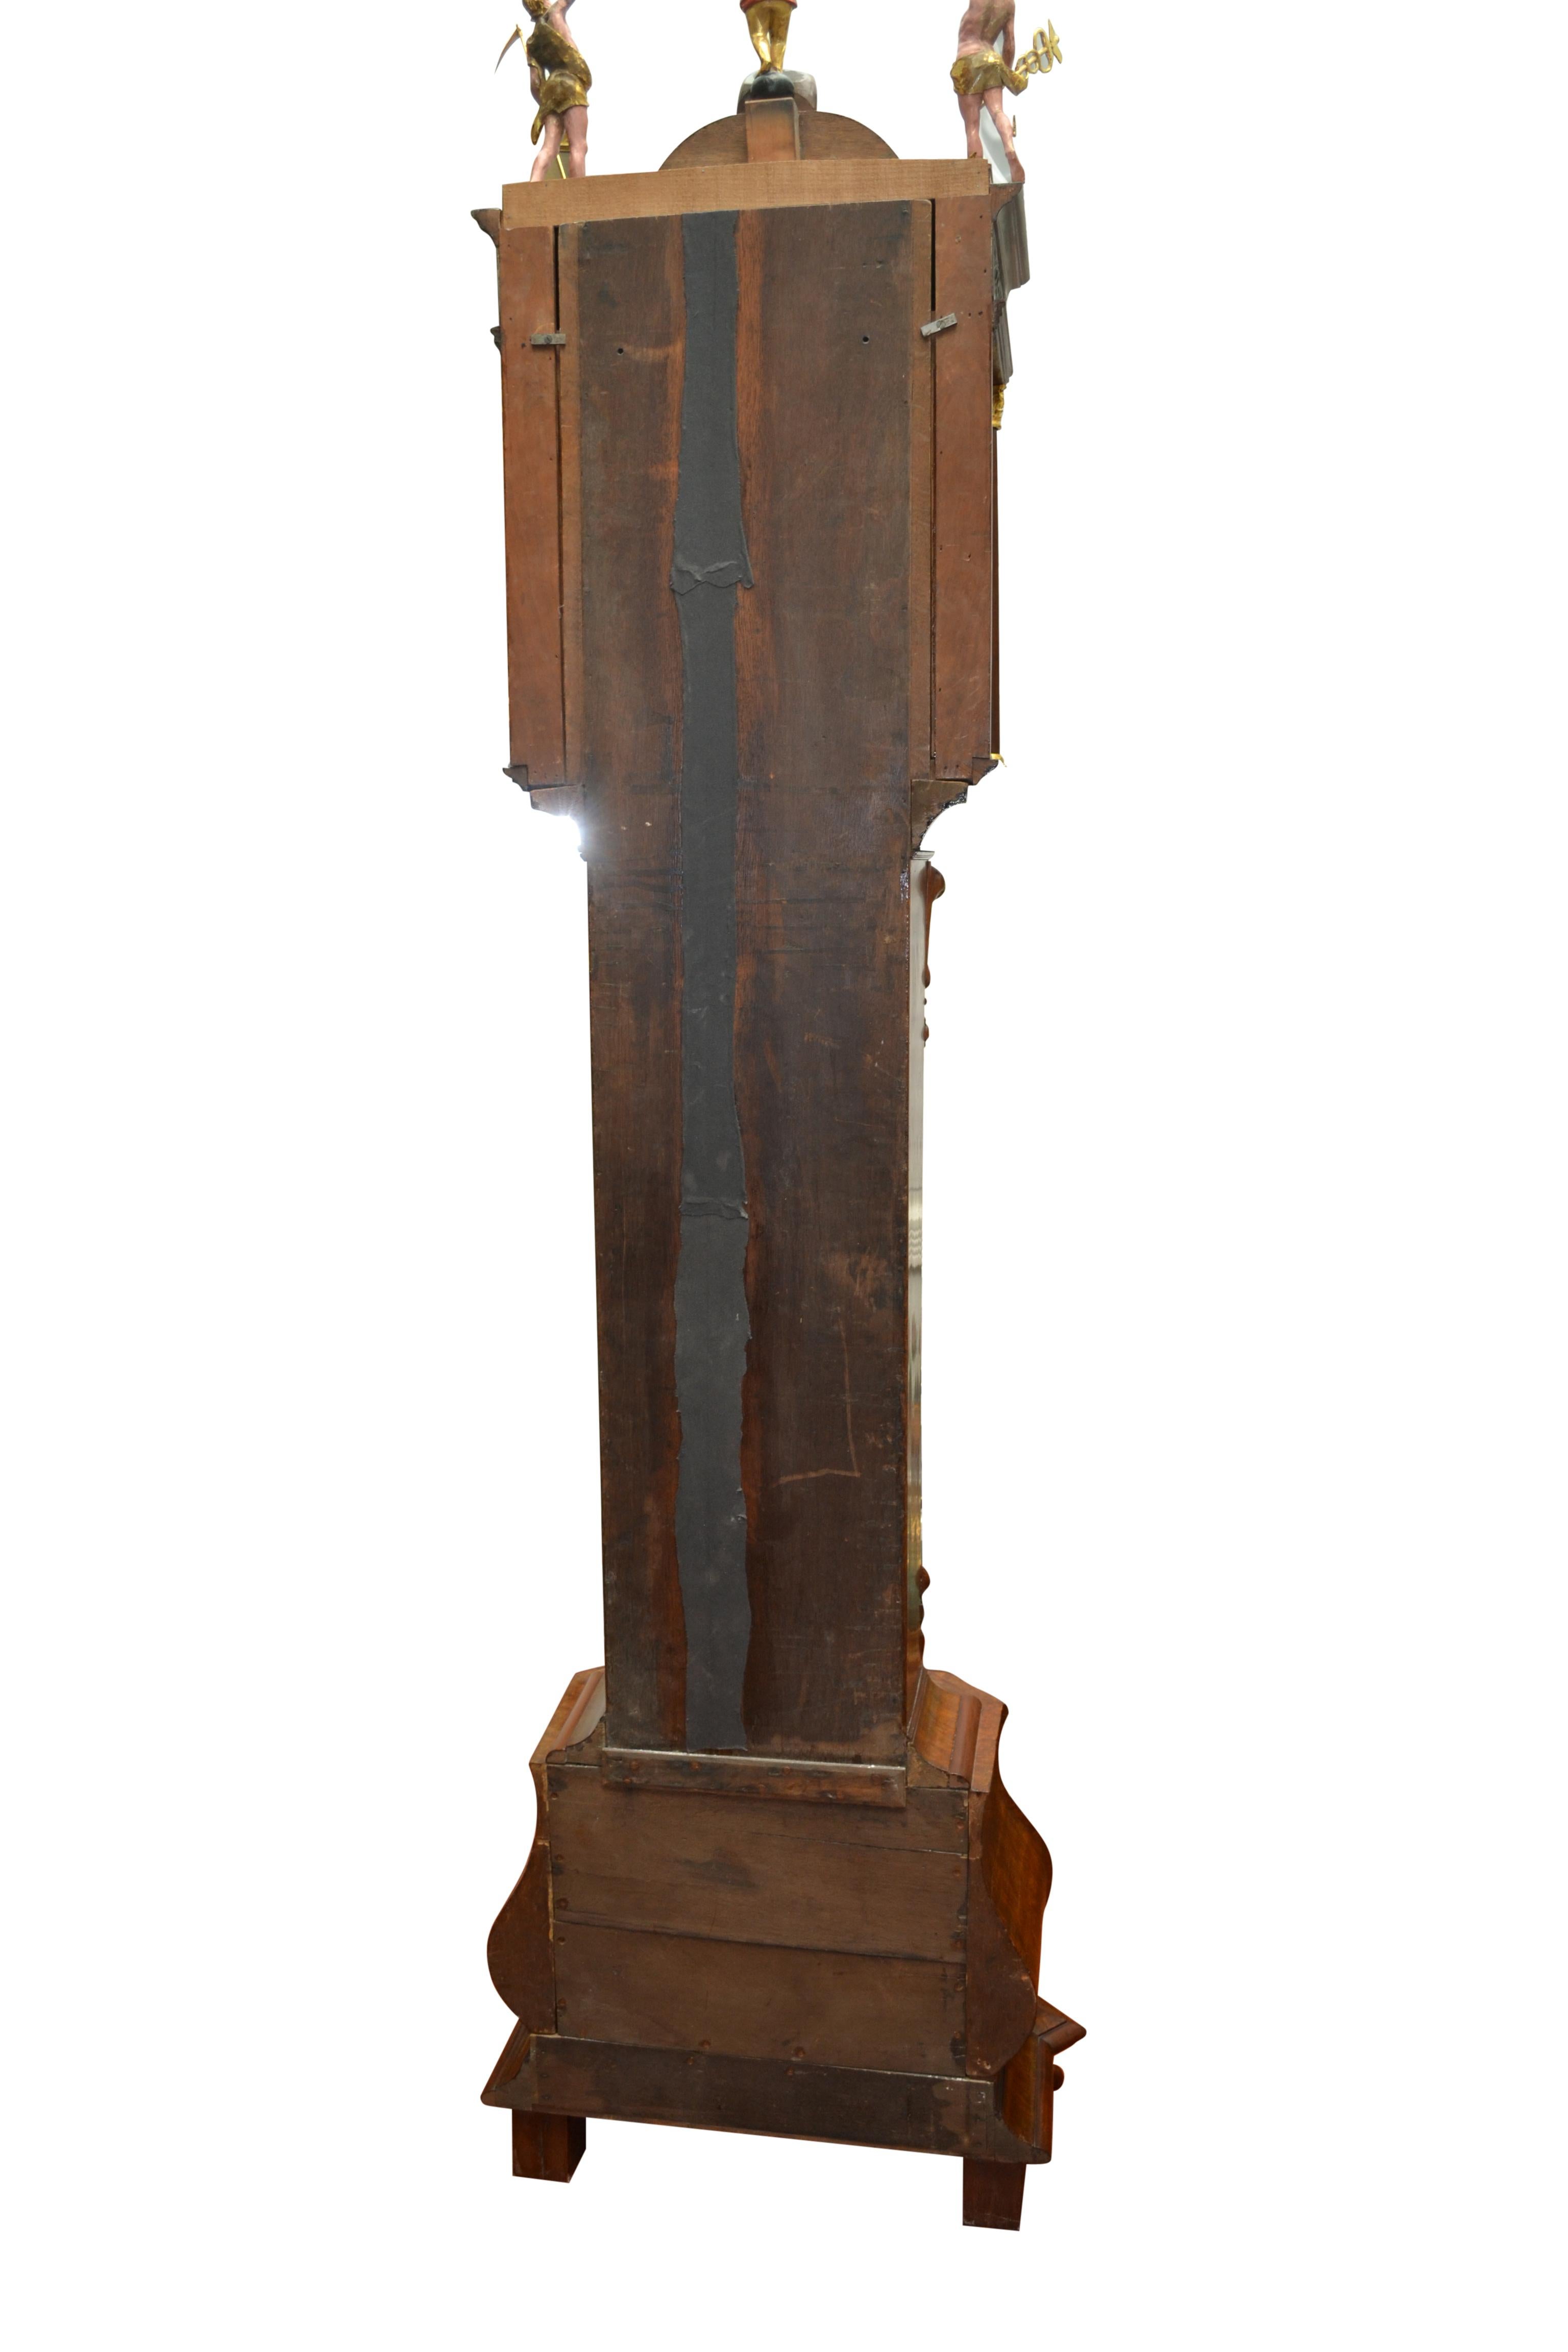 18th Century Dutch 'Utrecht' Longcase or Grandfather Clock by W.V. Dadelbeek For Sale 2